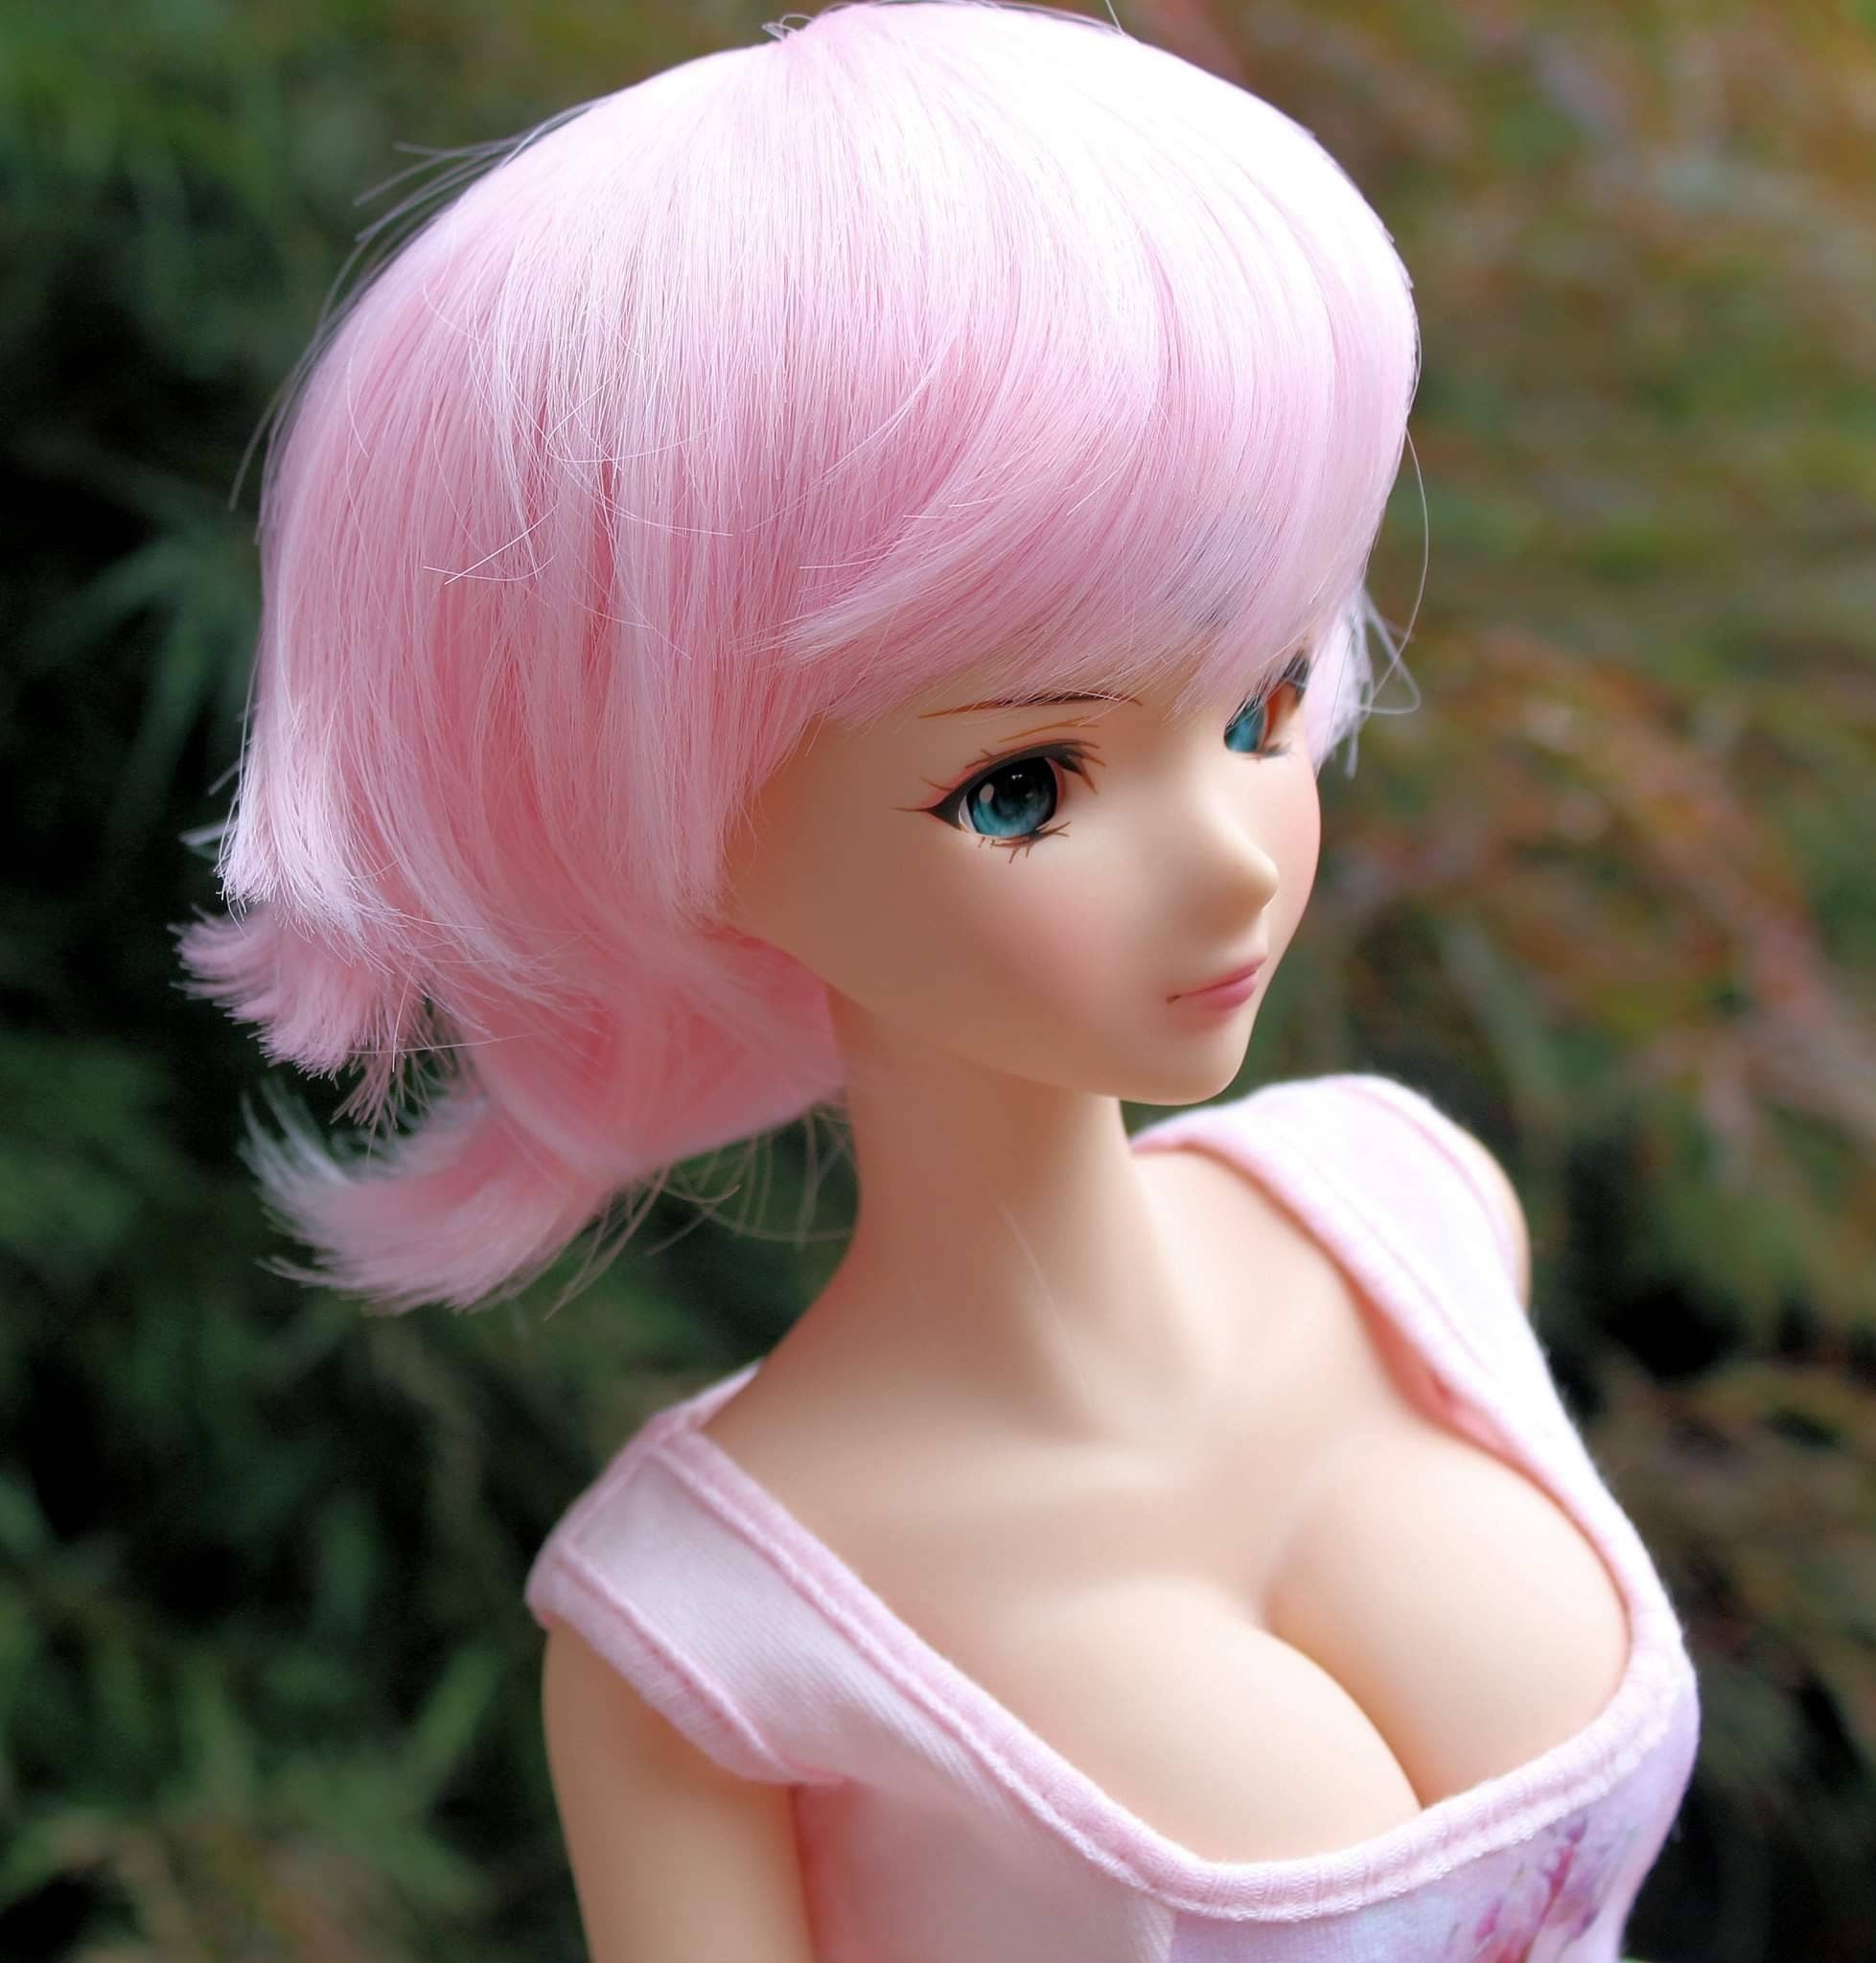 Custom doll Wig for Smart Dolls- Heat Safe - Tangle Resistant- 8.5" head size of Bjd, SD, Dollfie Dream dolls Pink pixie